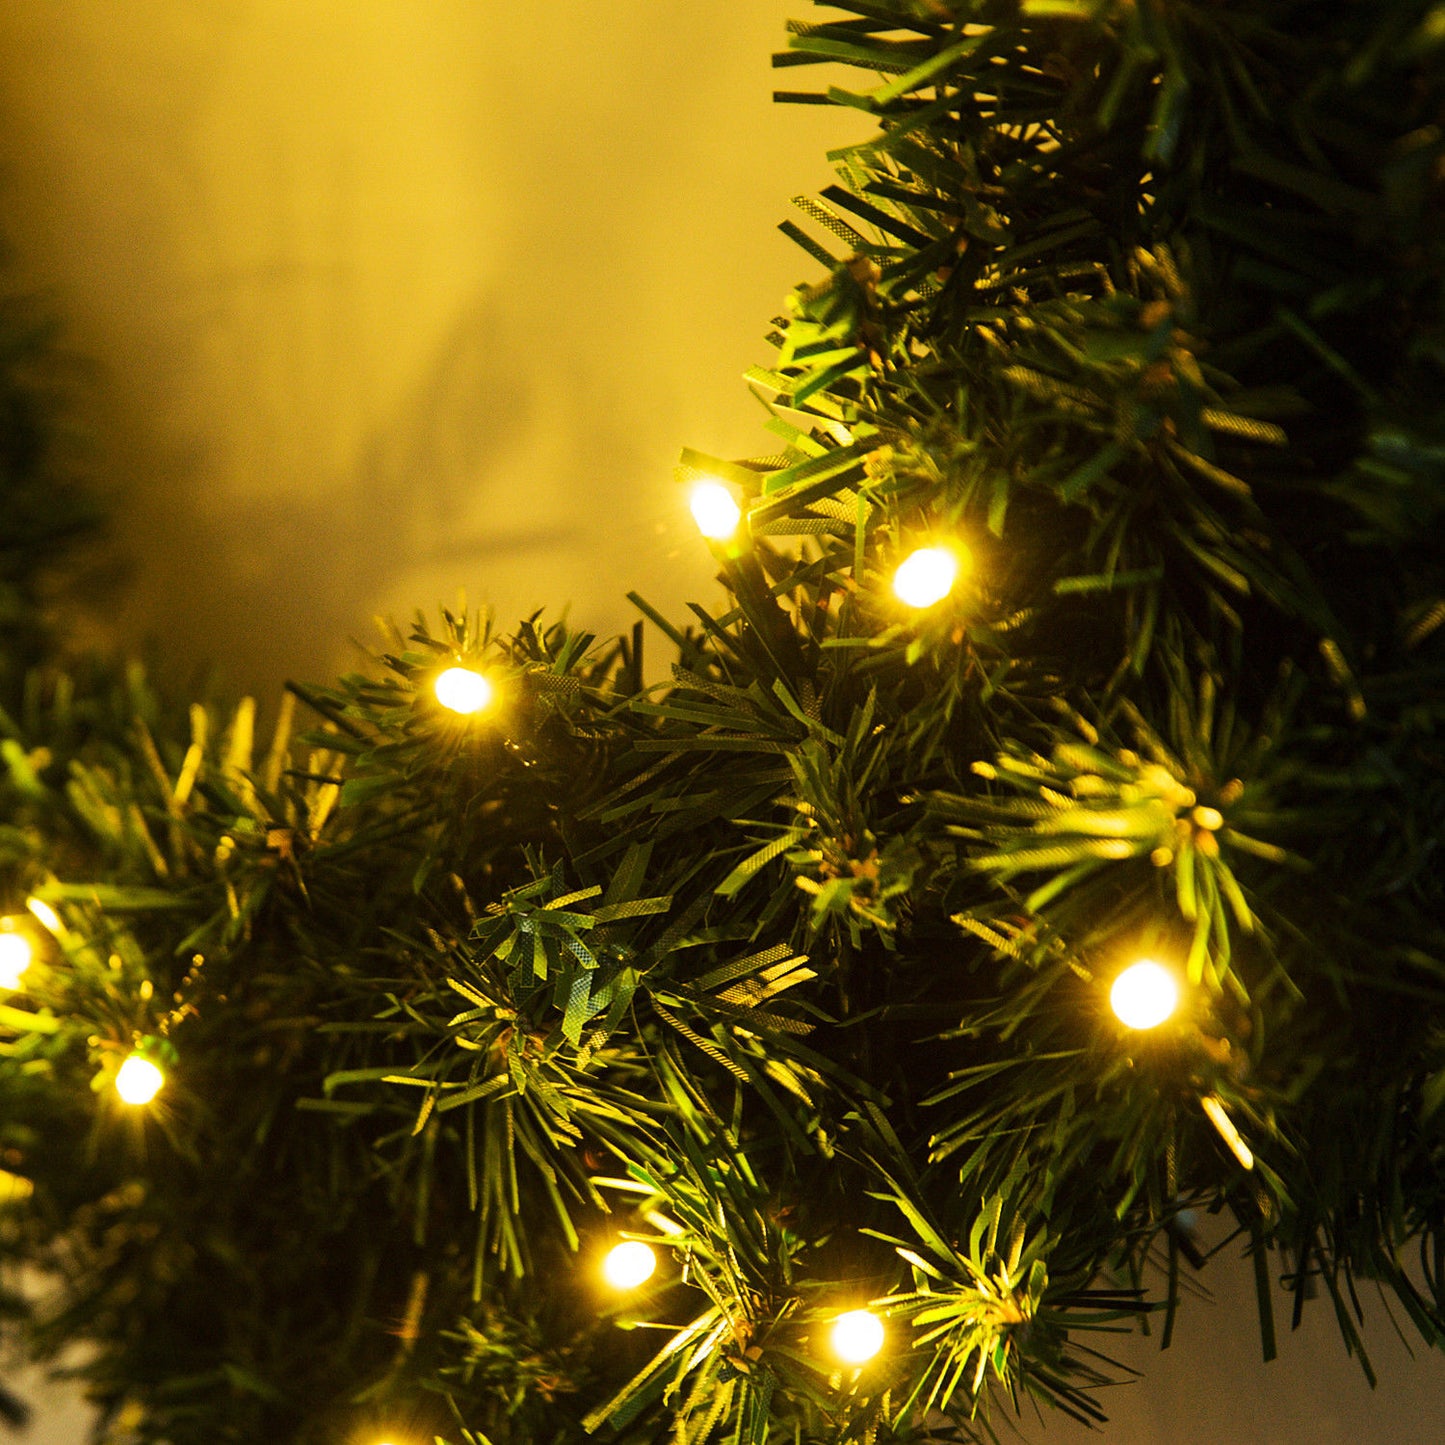 HOMCOM Christmas Wreath Decoration, 50 LED Lights